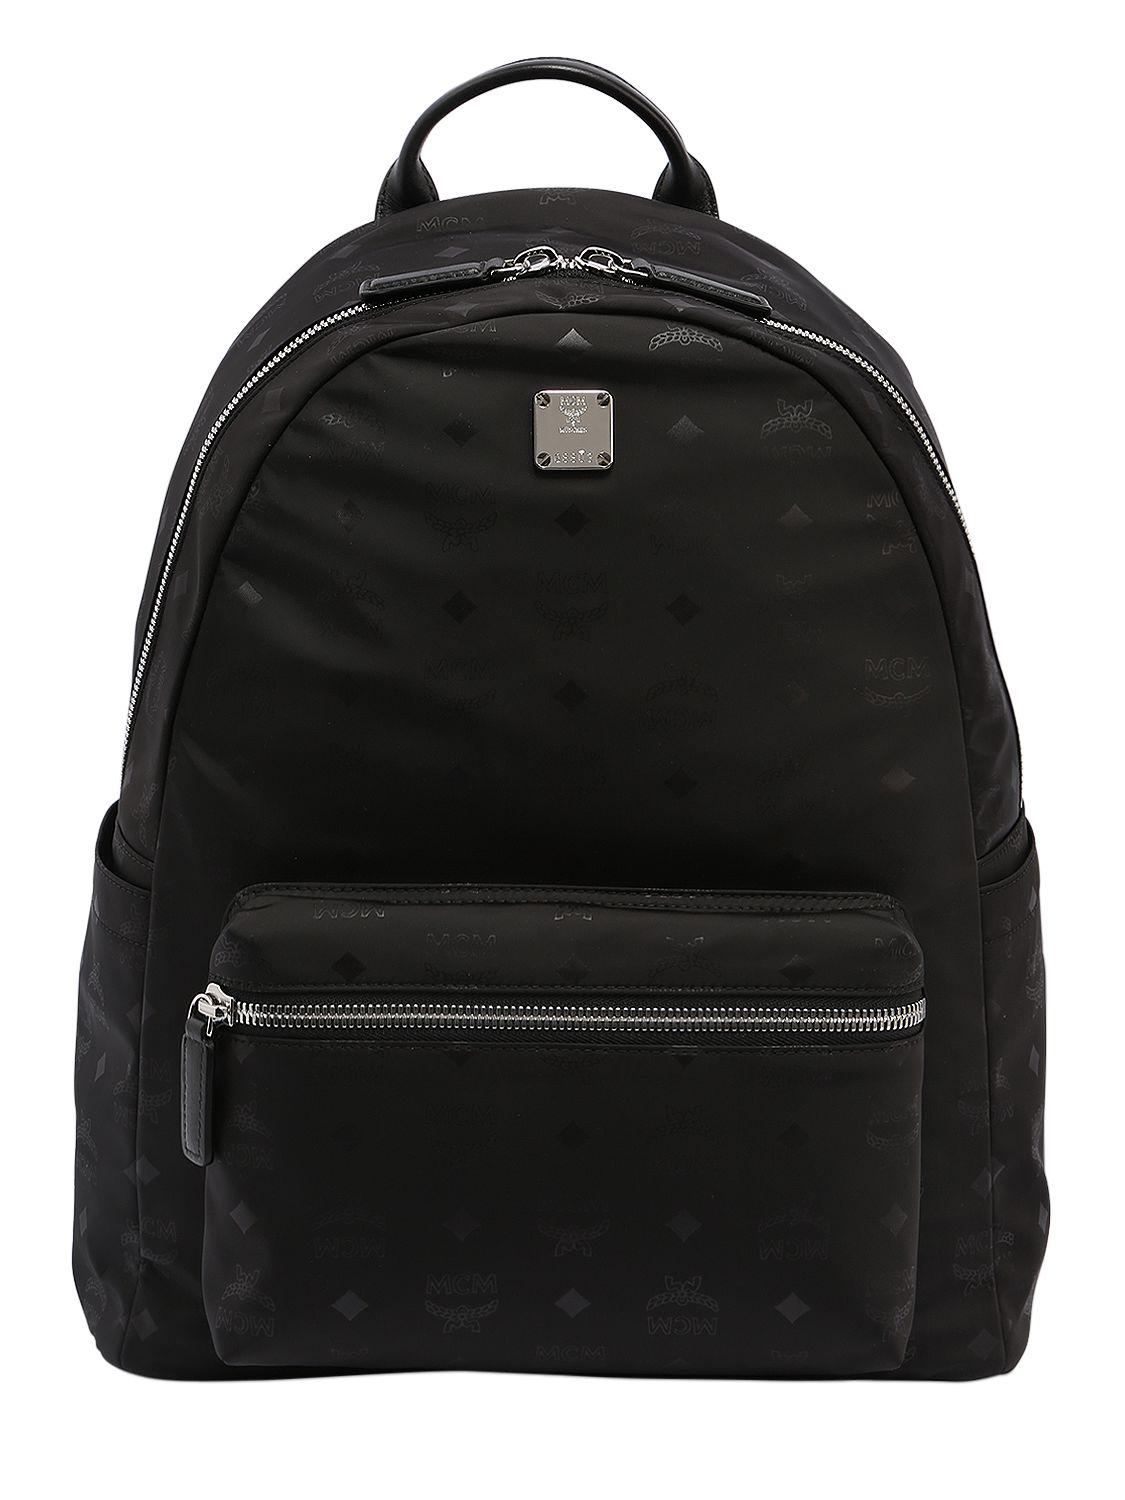 Lyst - Mcm Medium Dieter Nylon Backpack in Black